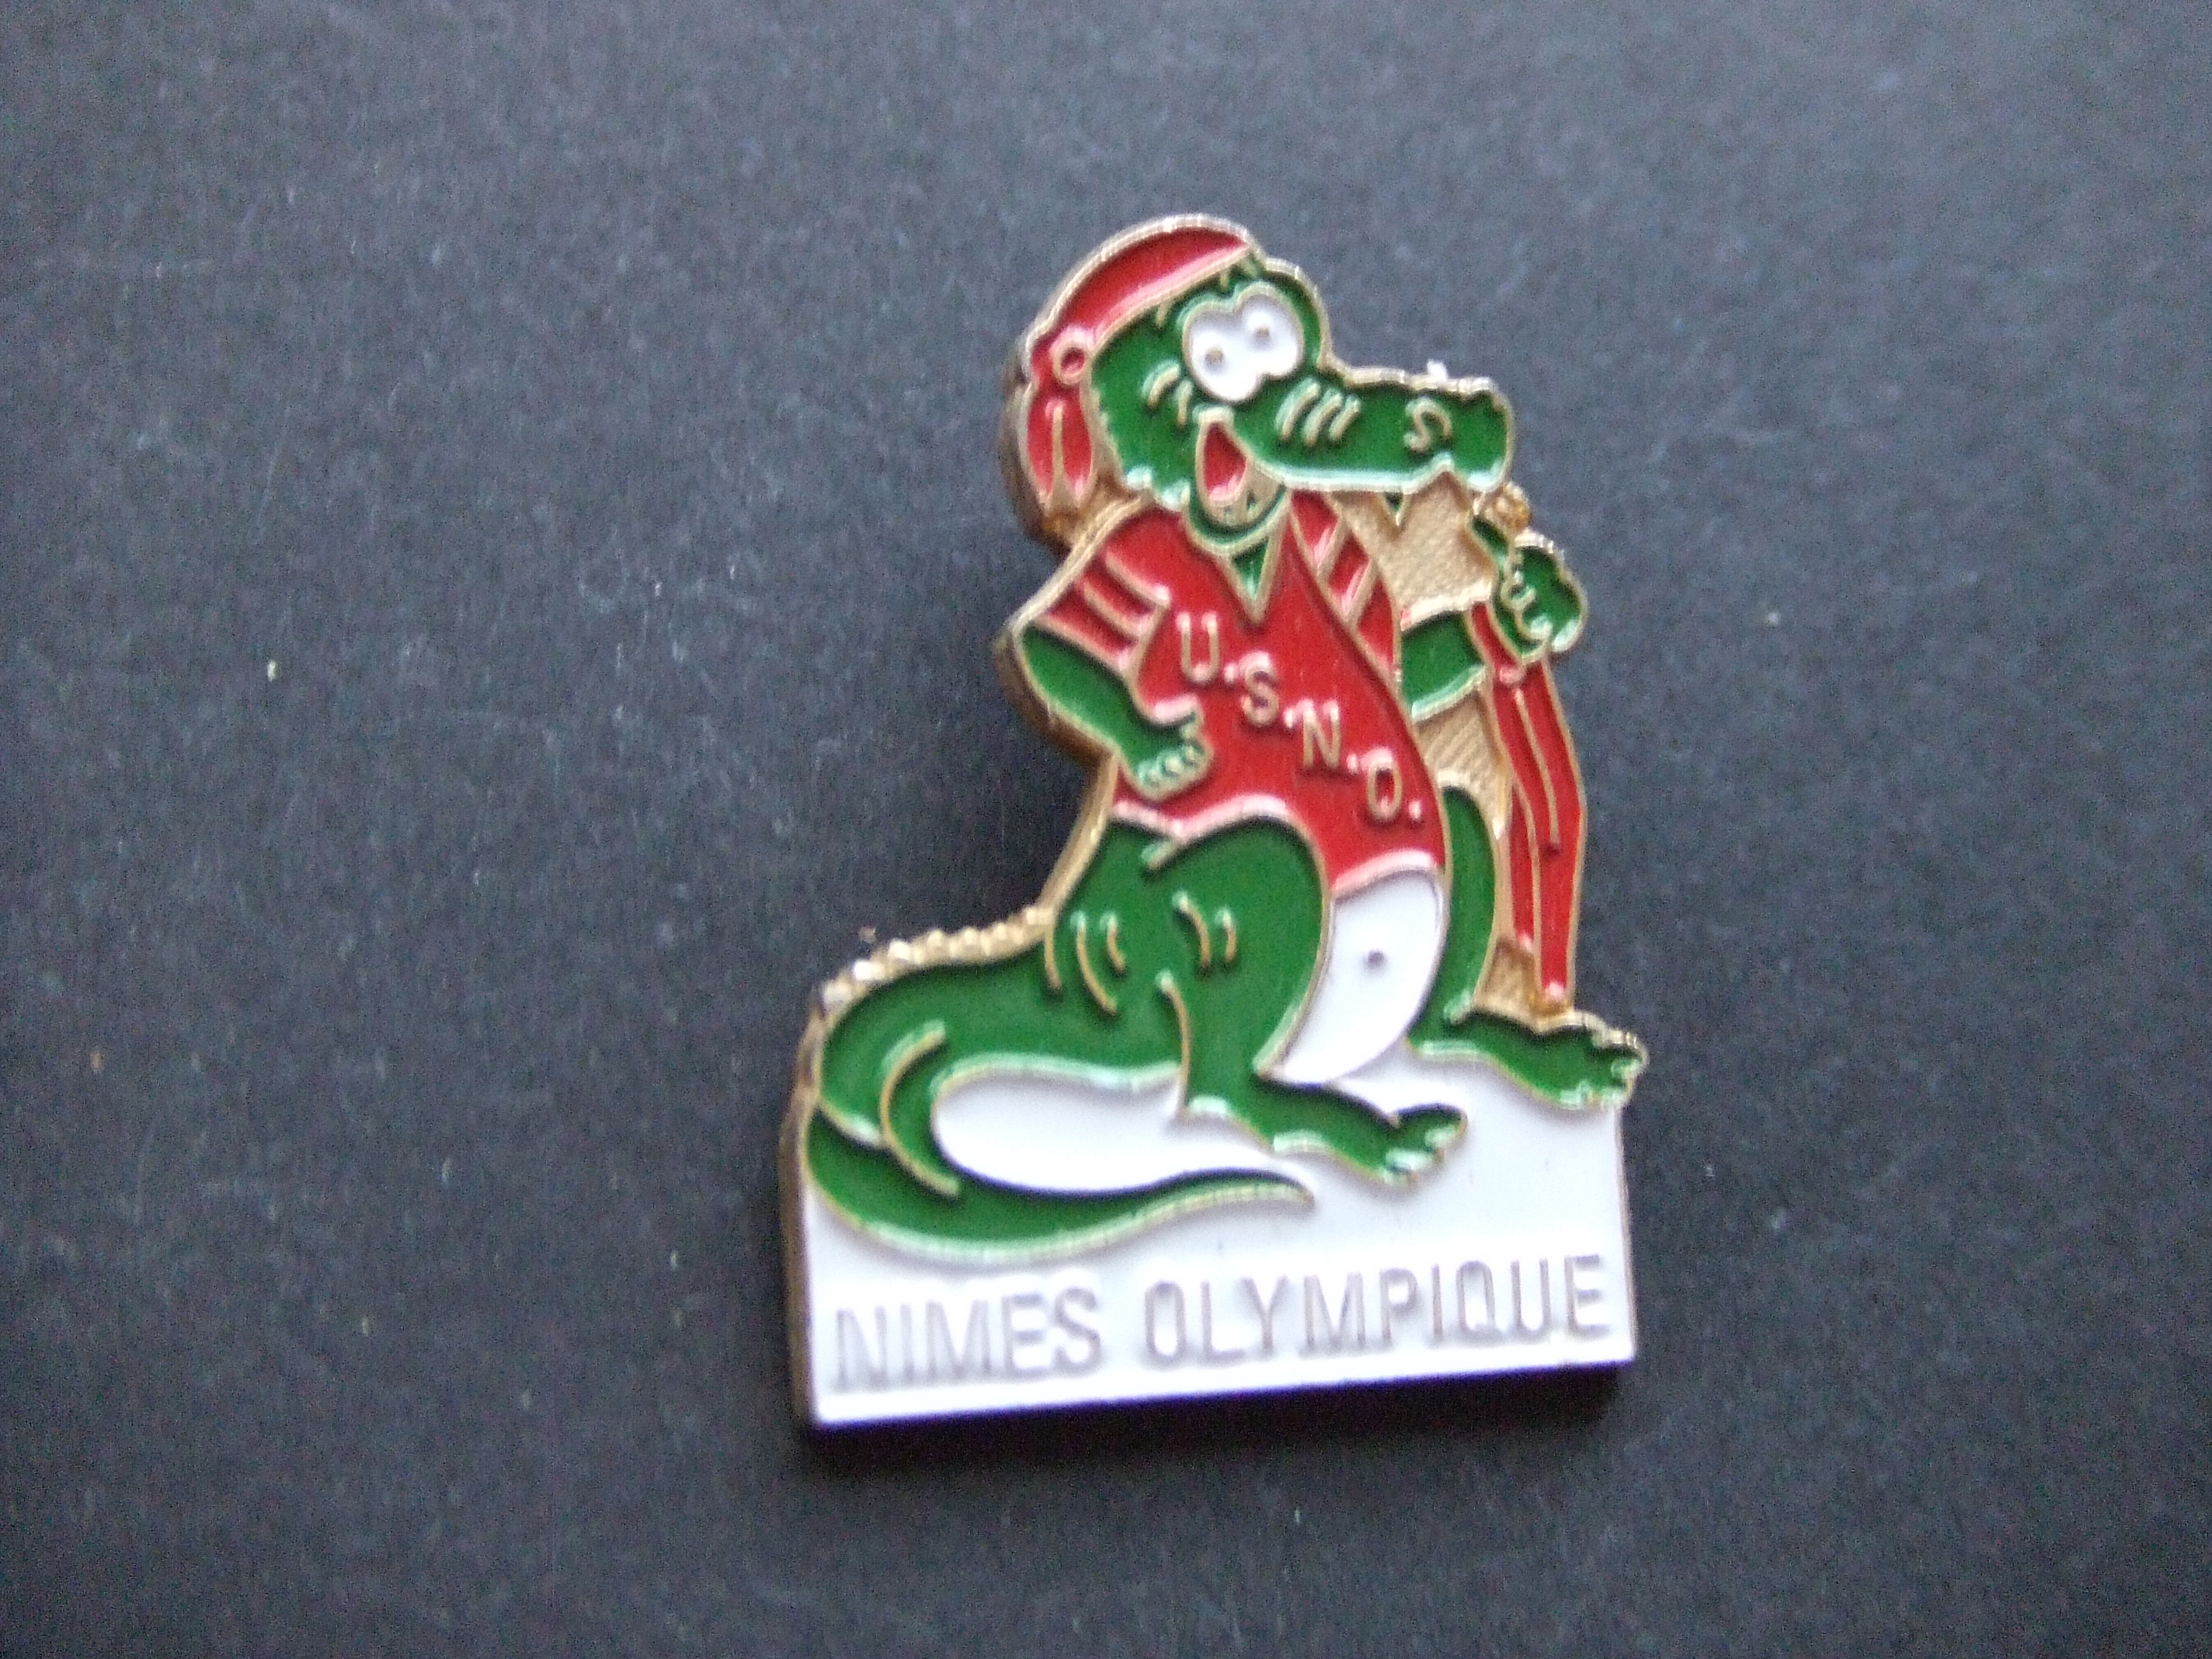 Olympique Nîmes.voetbal club Frankrijk logo krokodil